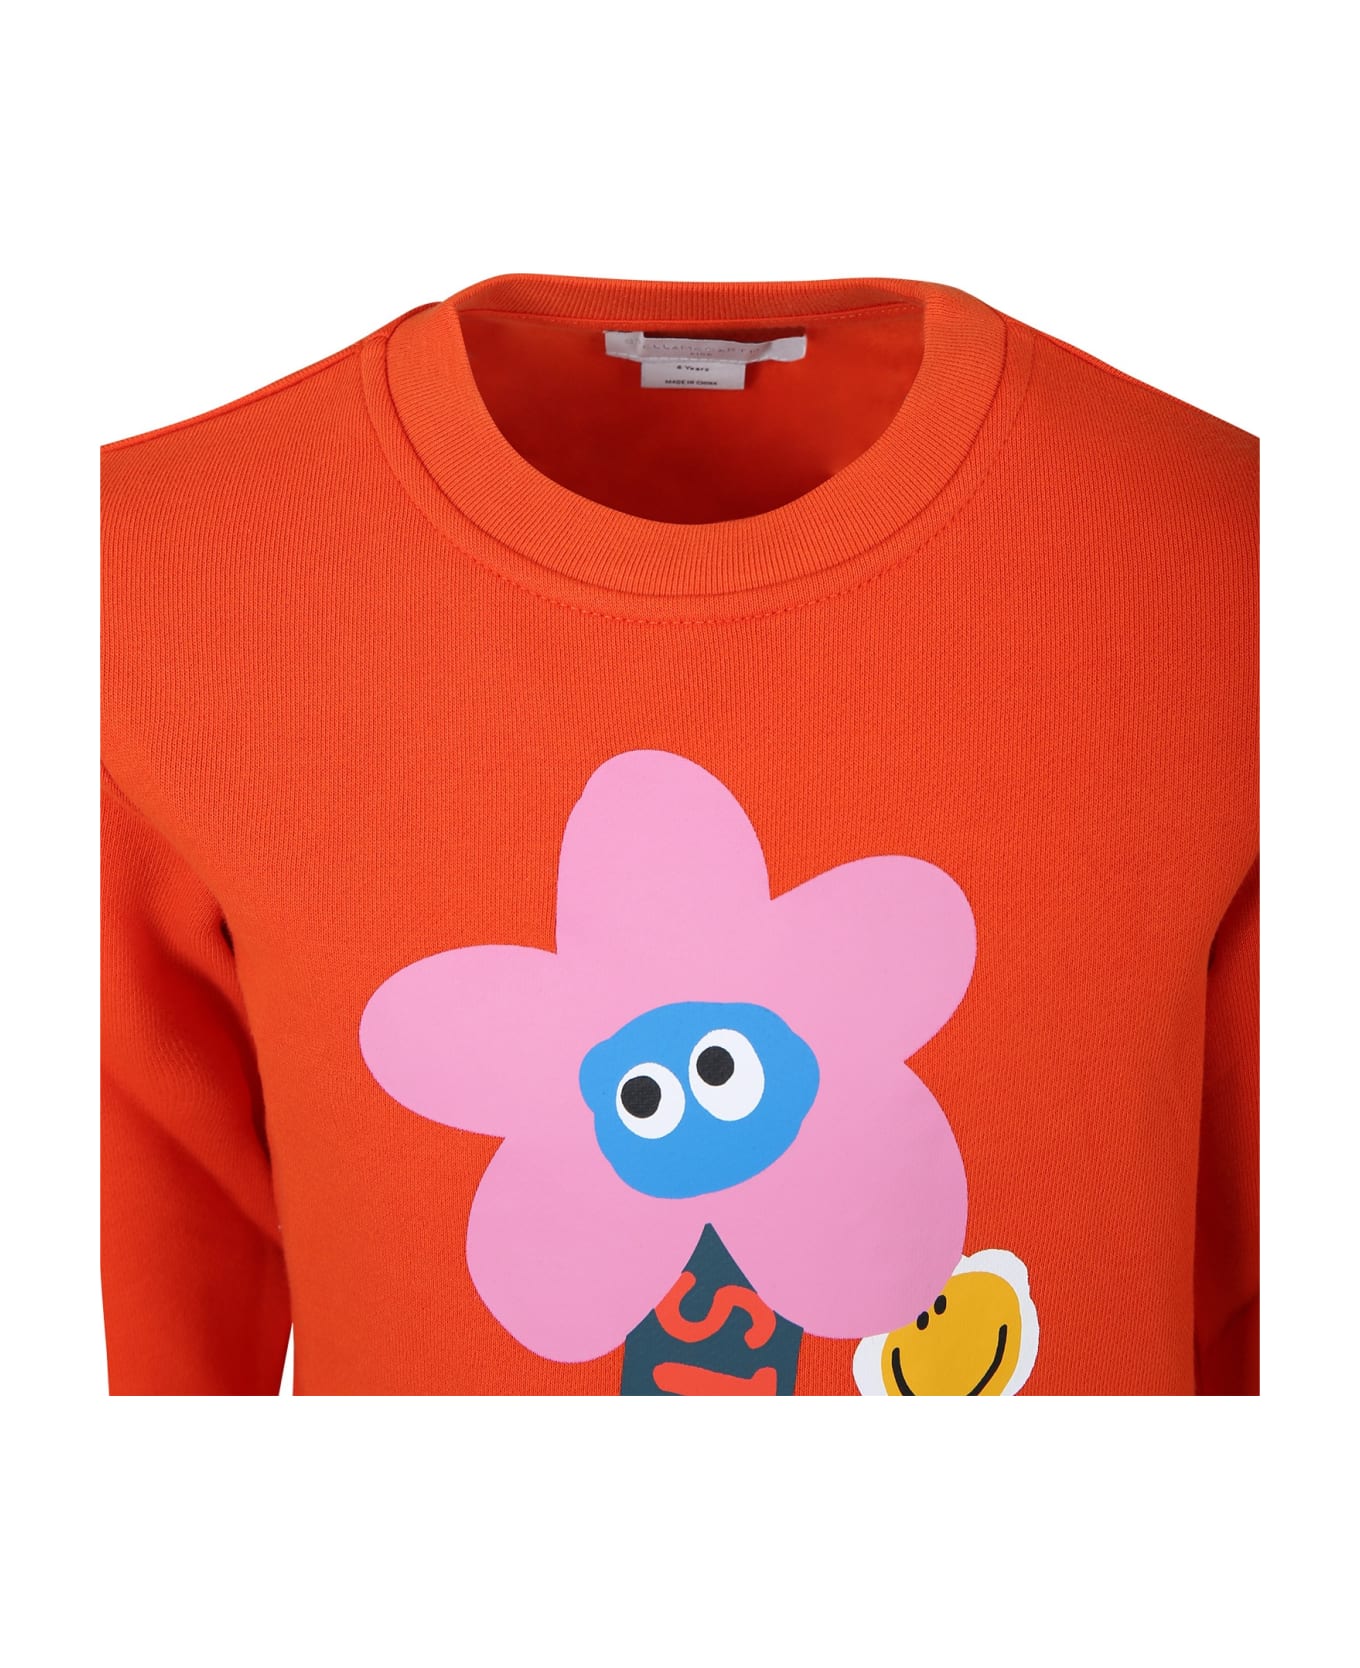 Stella McCartney Kids Orange Sweatshirt For Girl With Multicolor Flower Print - Orange